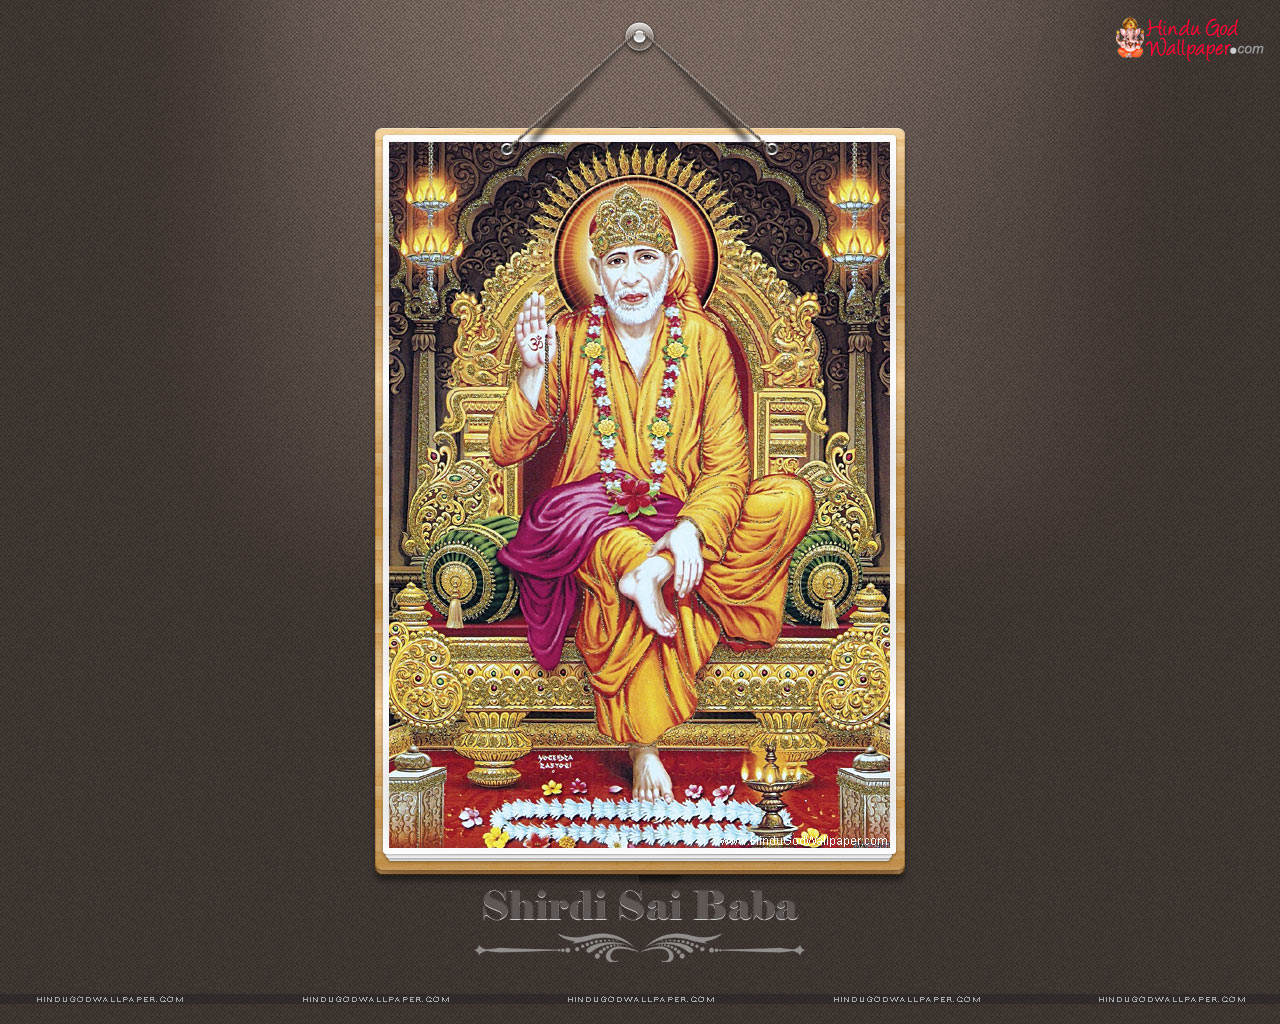 Shirdi Sai Baba HD Wallpapers Full Size Download